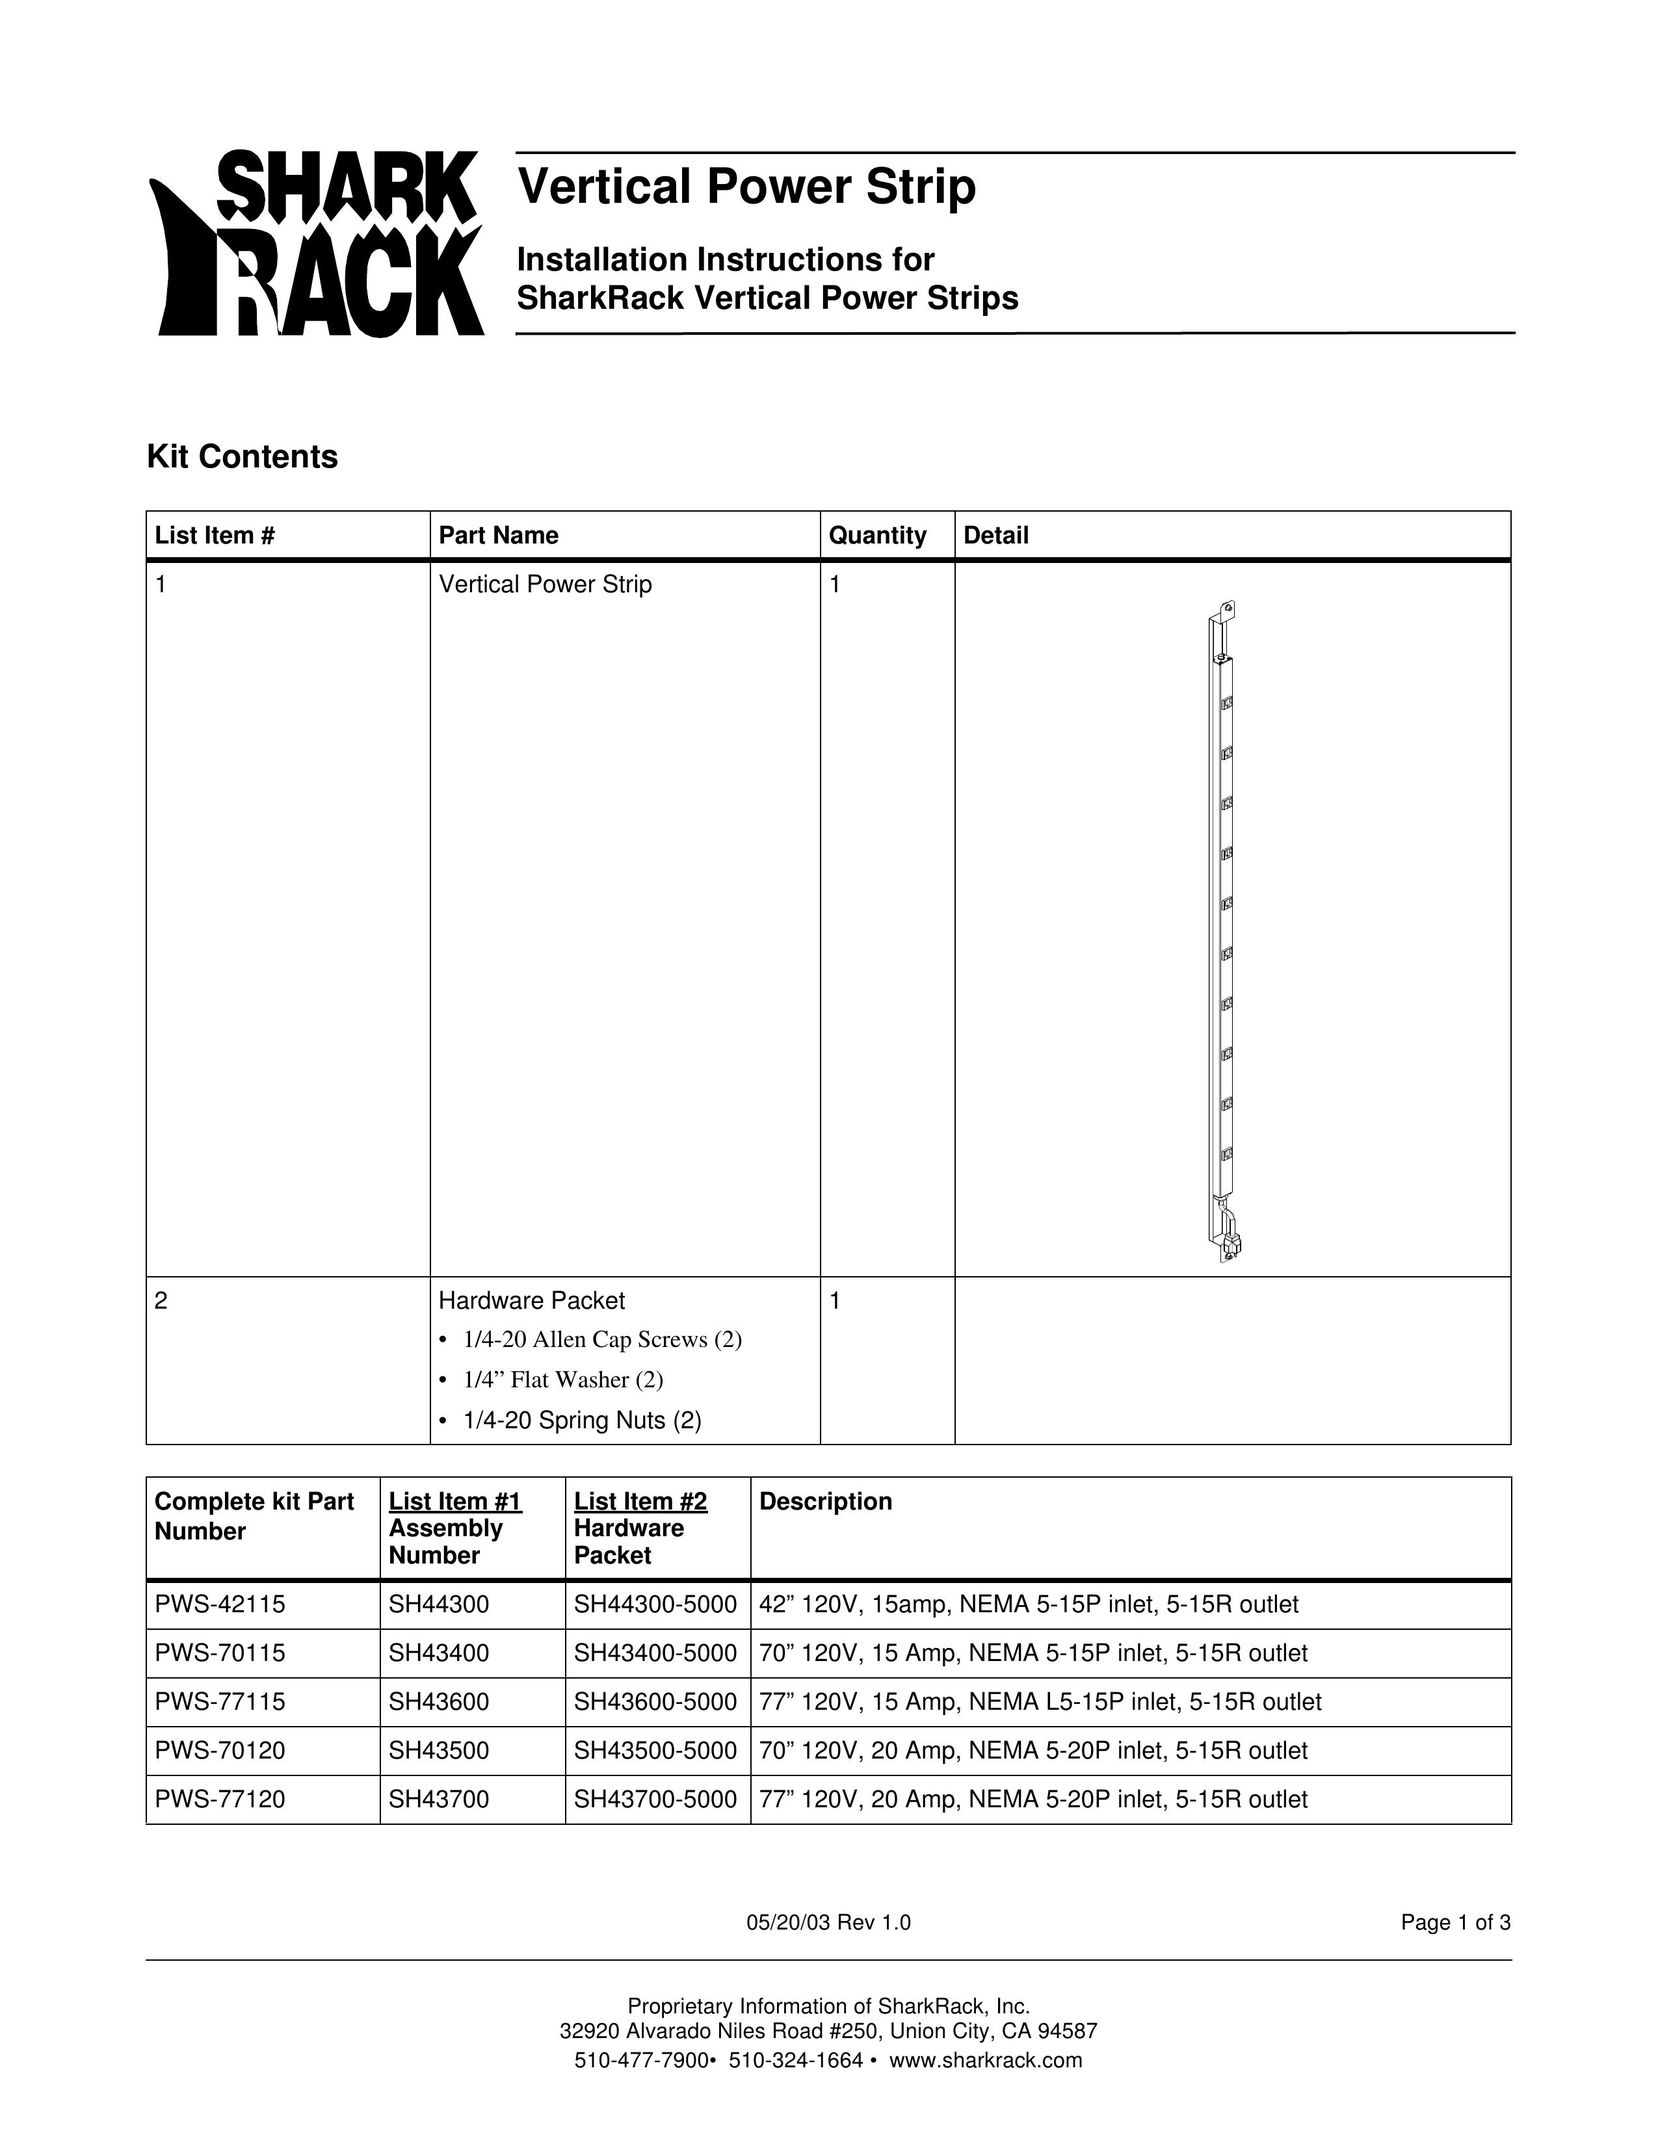 SharkRack PWS-77120 Surge Protector User Manual